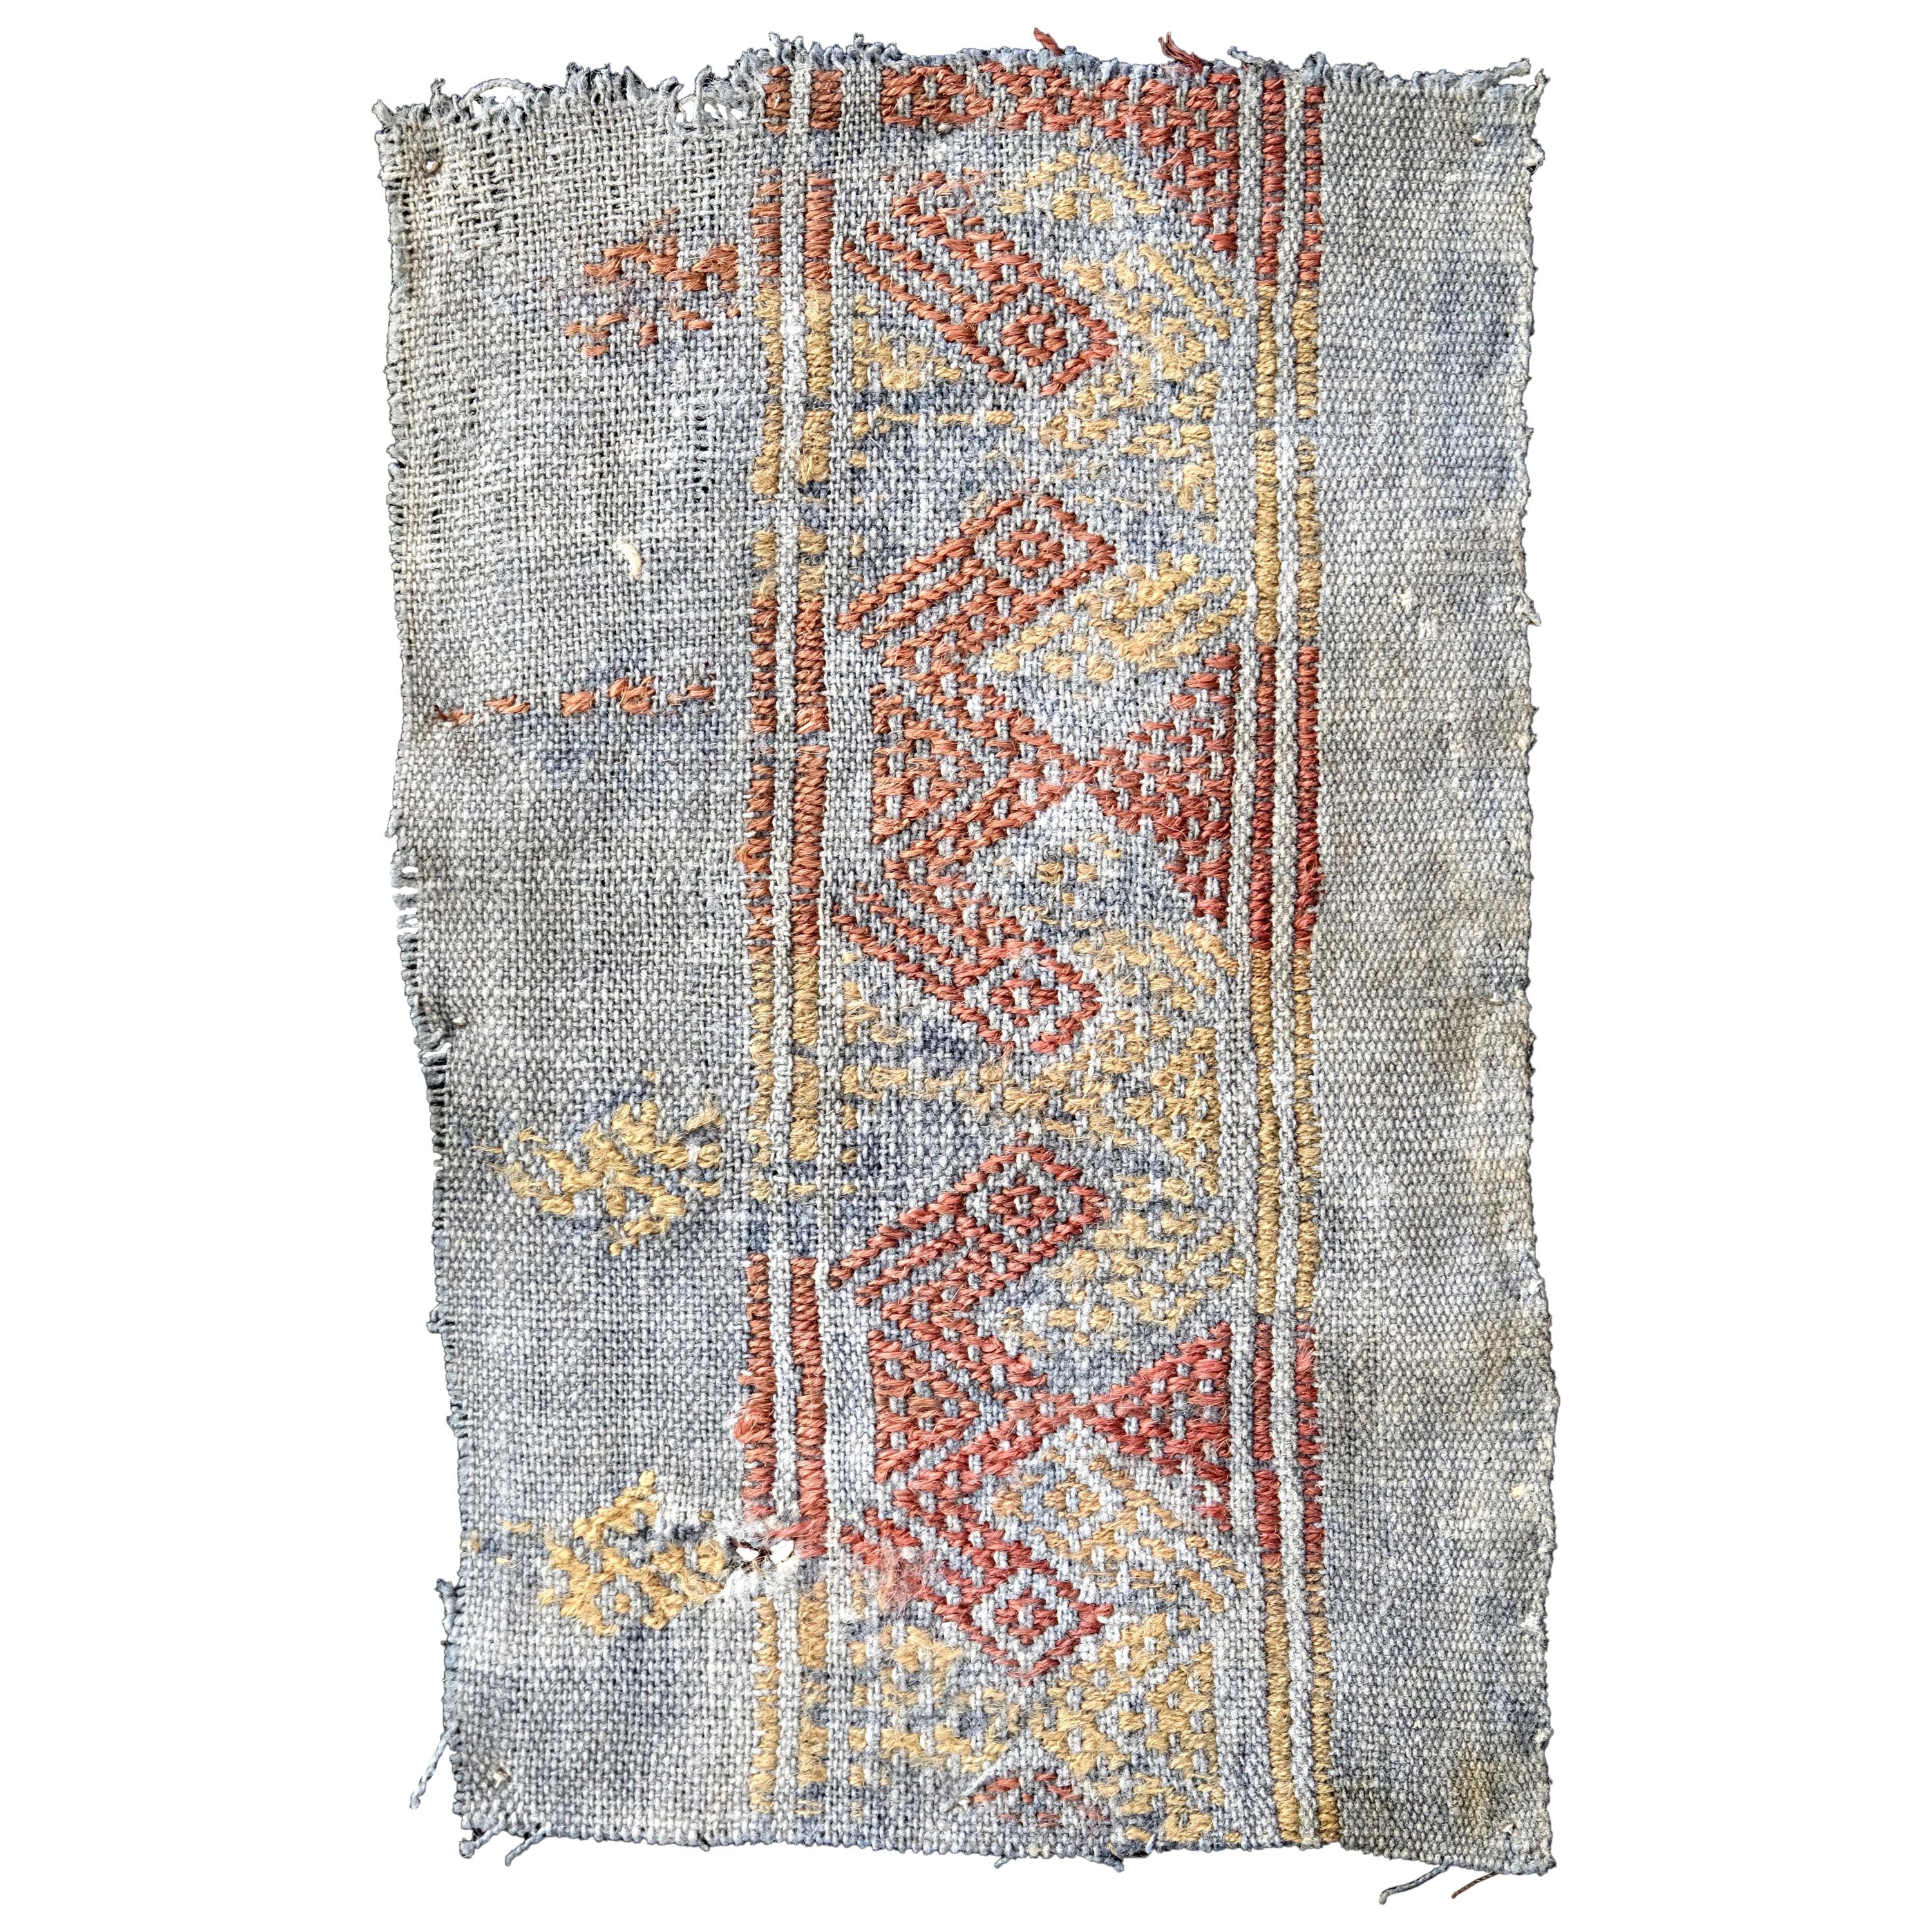 Cubist Chancay Pre-Columbian Textile, Peru, 1100-1420 AD - Ex Ferdinand Anton